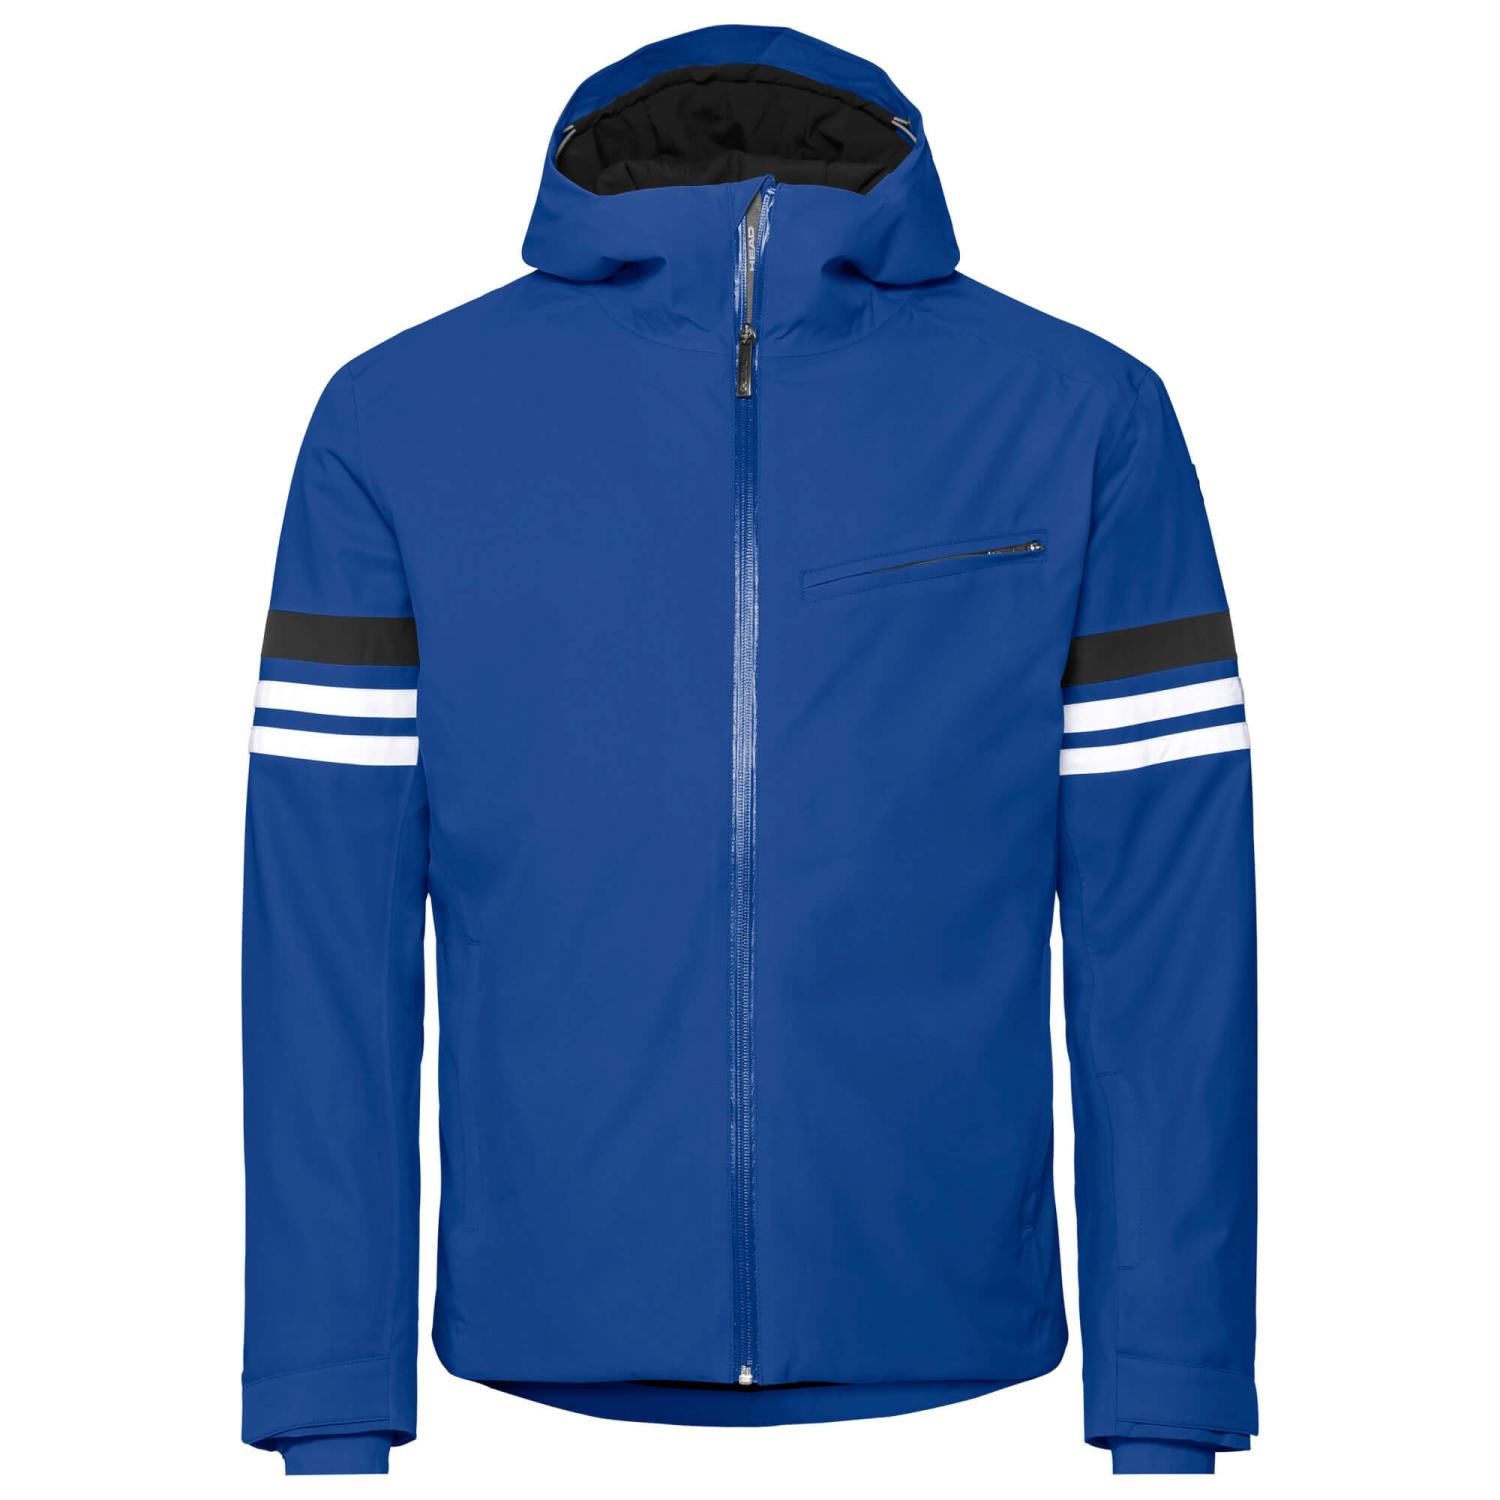 Куртка горнолыжная Head 20-21 Timberline Jacket, цвет синий, размер M 821139 - фото 1